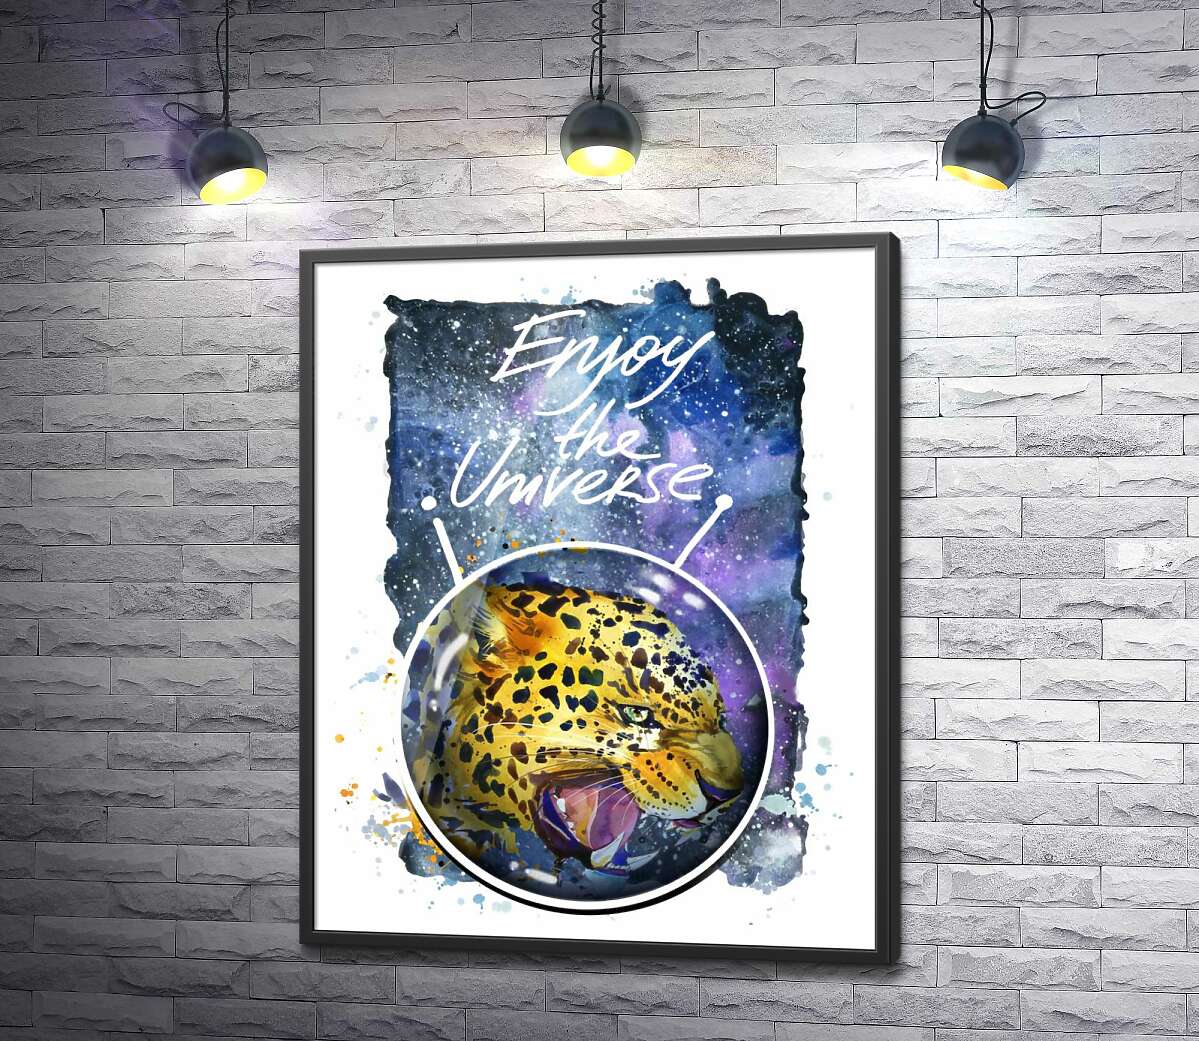 постер Хижий леопард скалить зуби в космосі з написом "Enjoy the Universe"